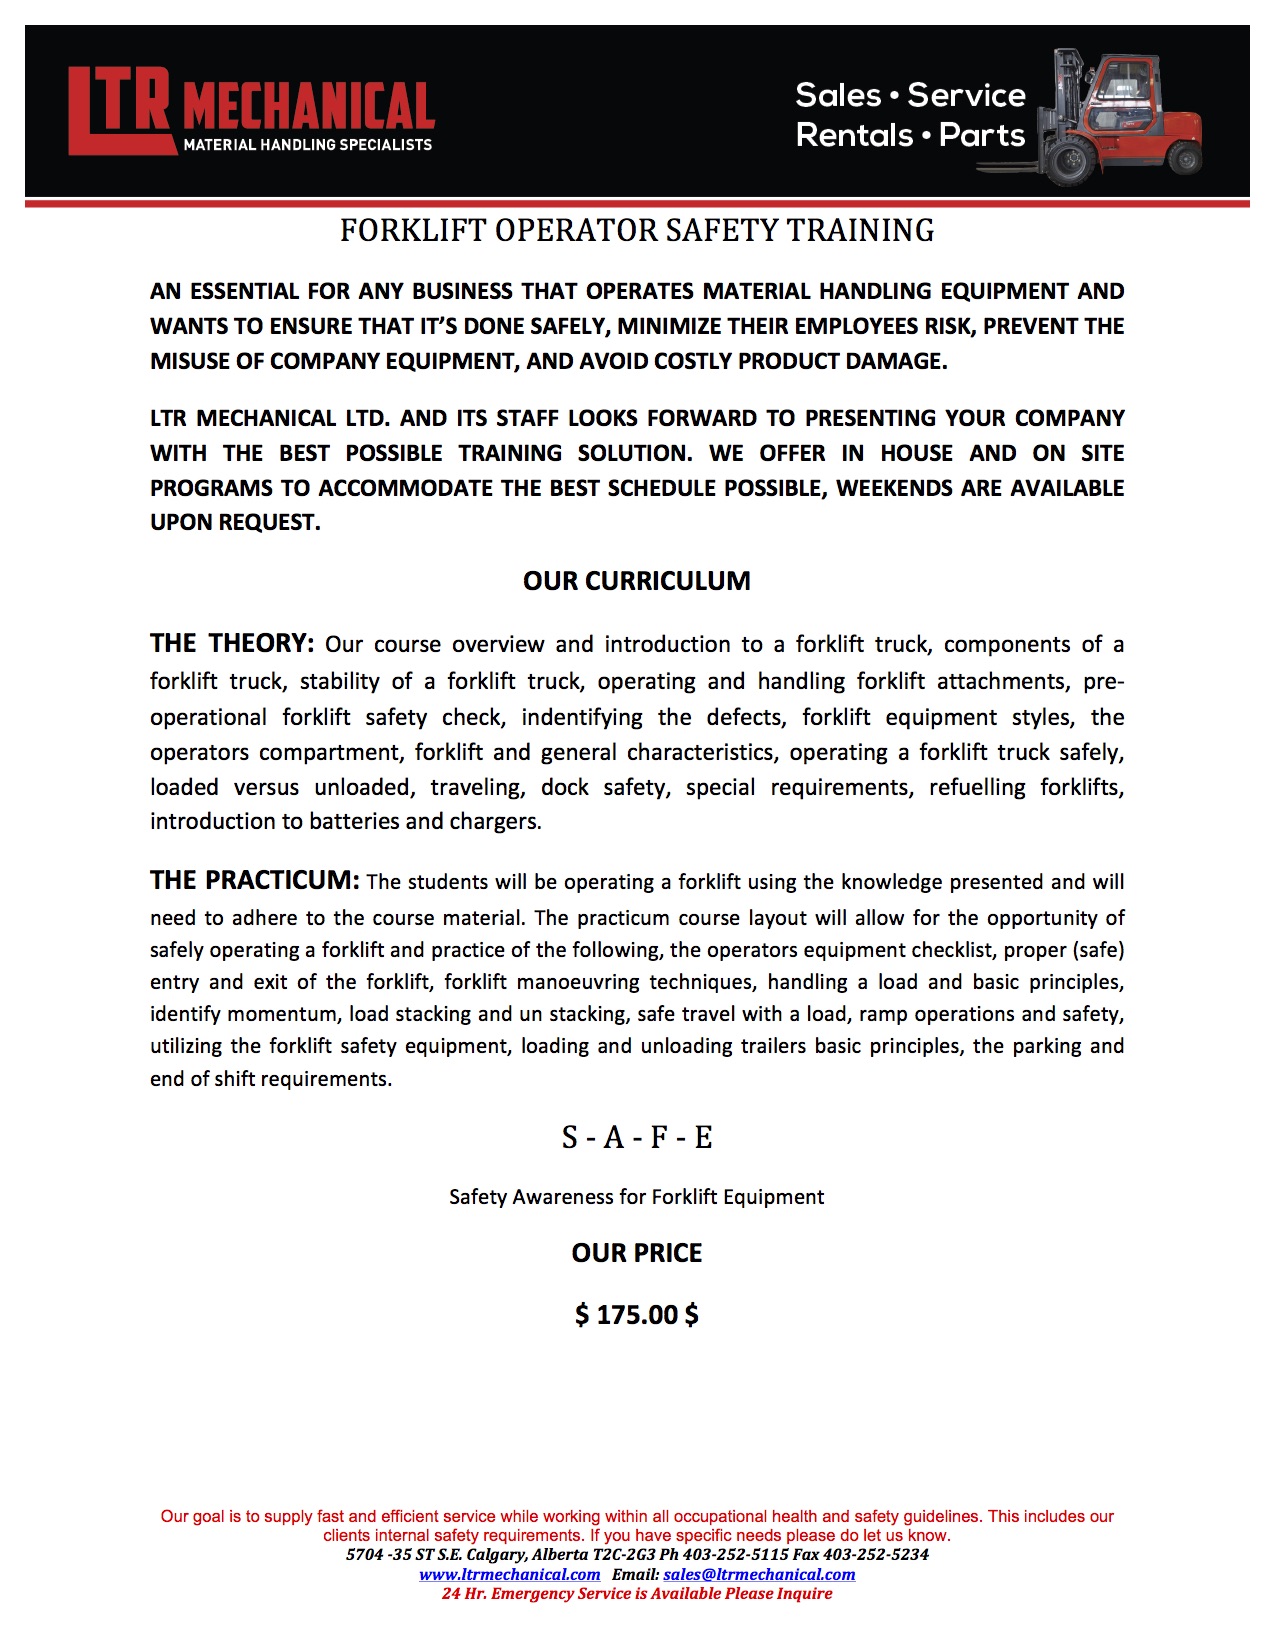 Forklift Operator Safety Training Information Image